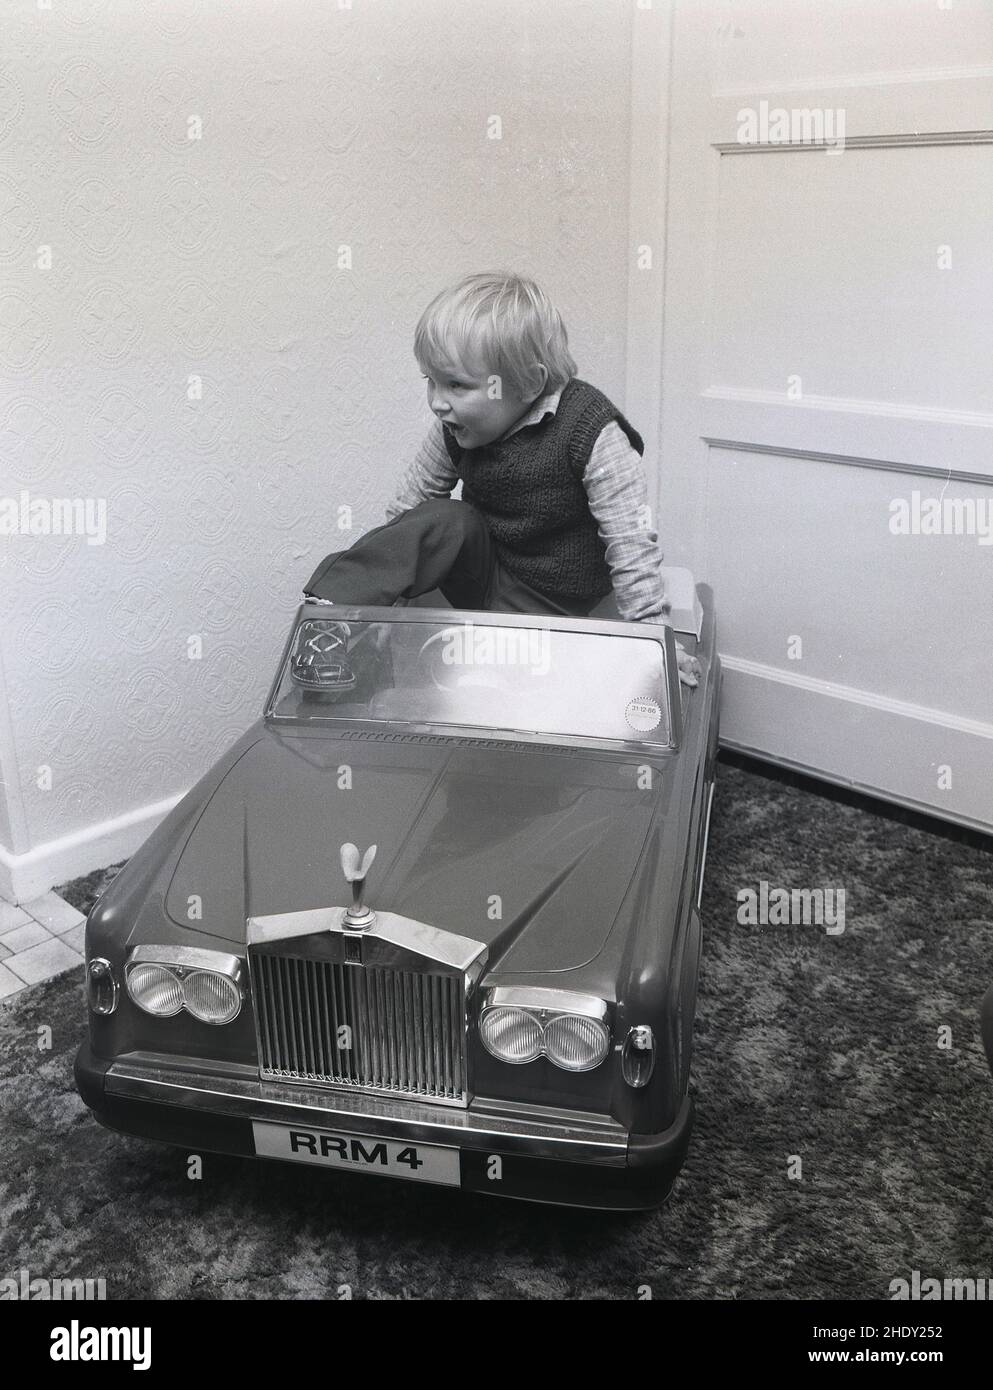 Childs pedal car -Fotos und -Bildmaterial in hoher Auflösung – Alamy